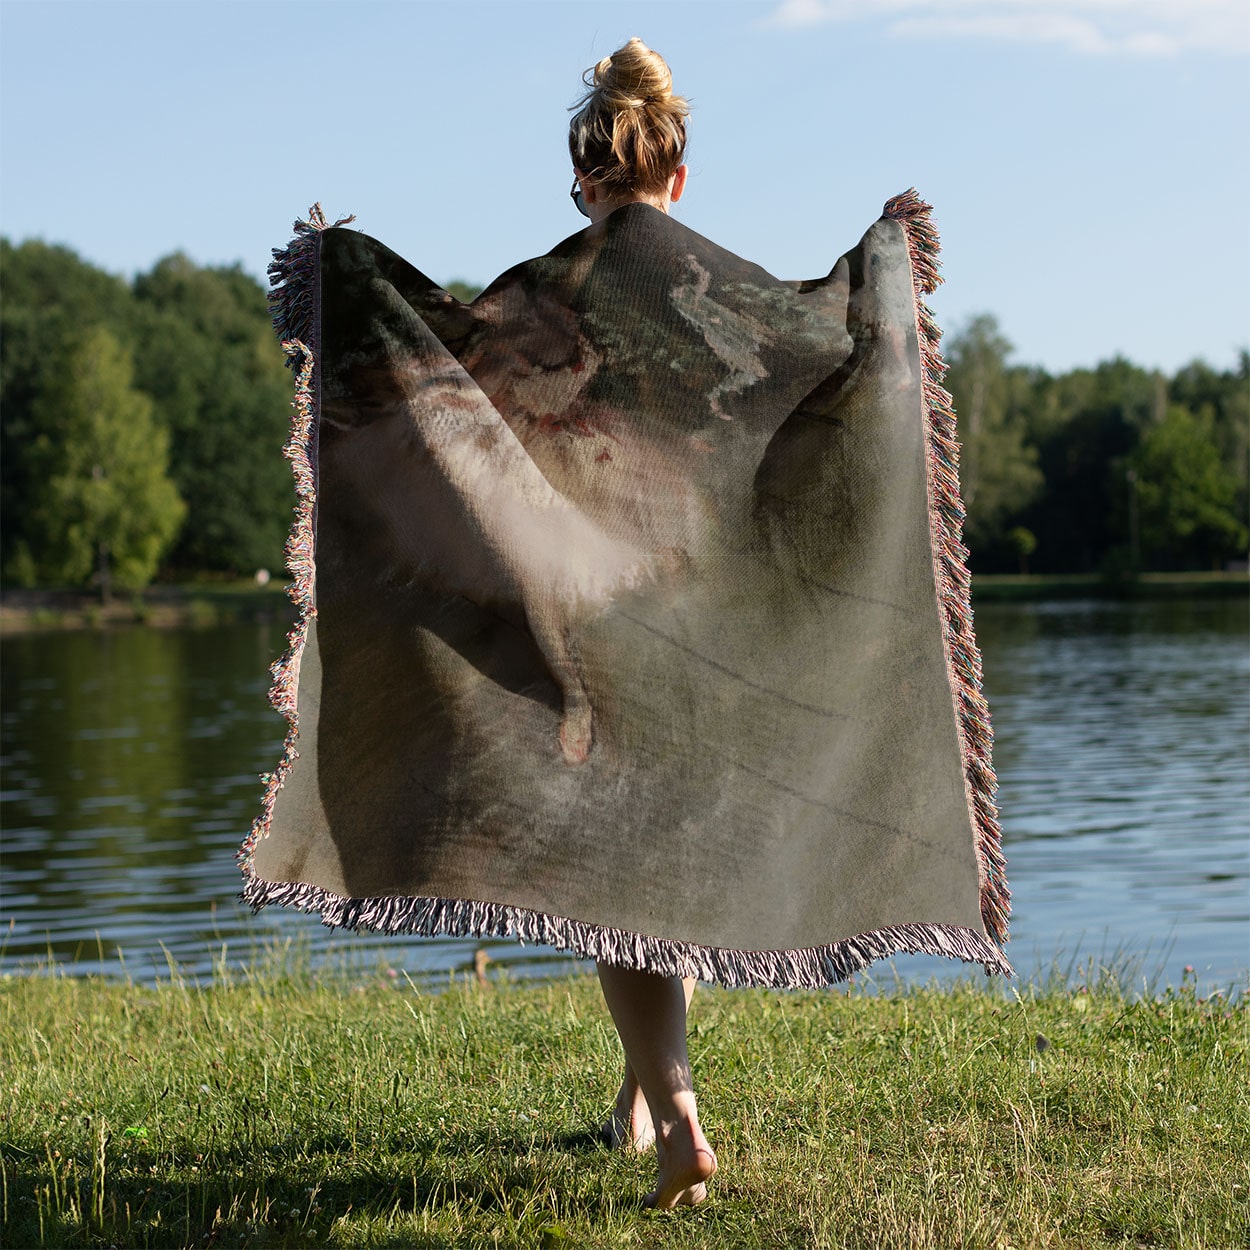 Ballerina Woven Blanket Held on a Woman's Back Outside